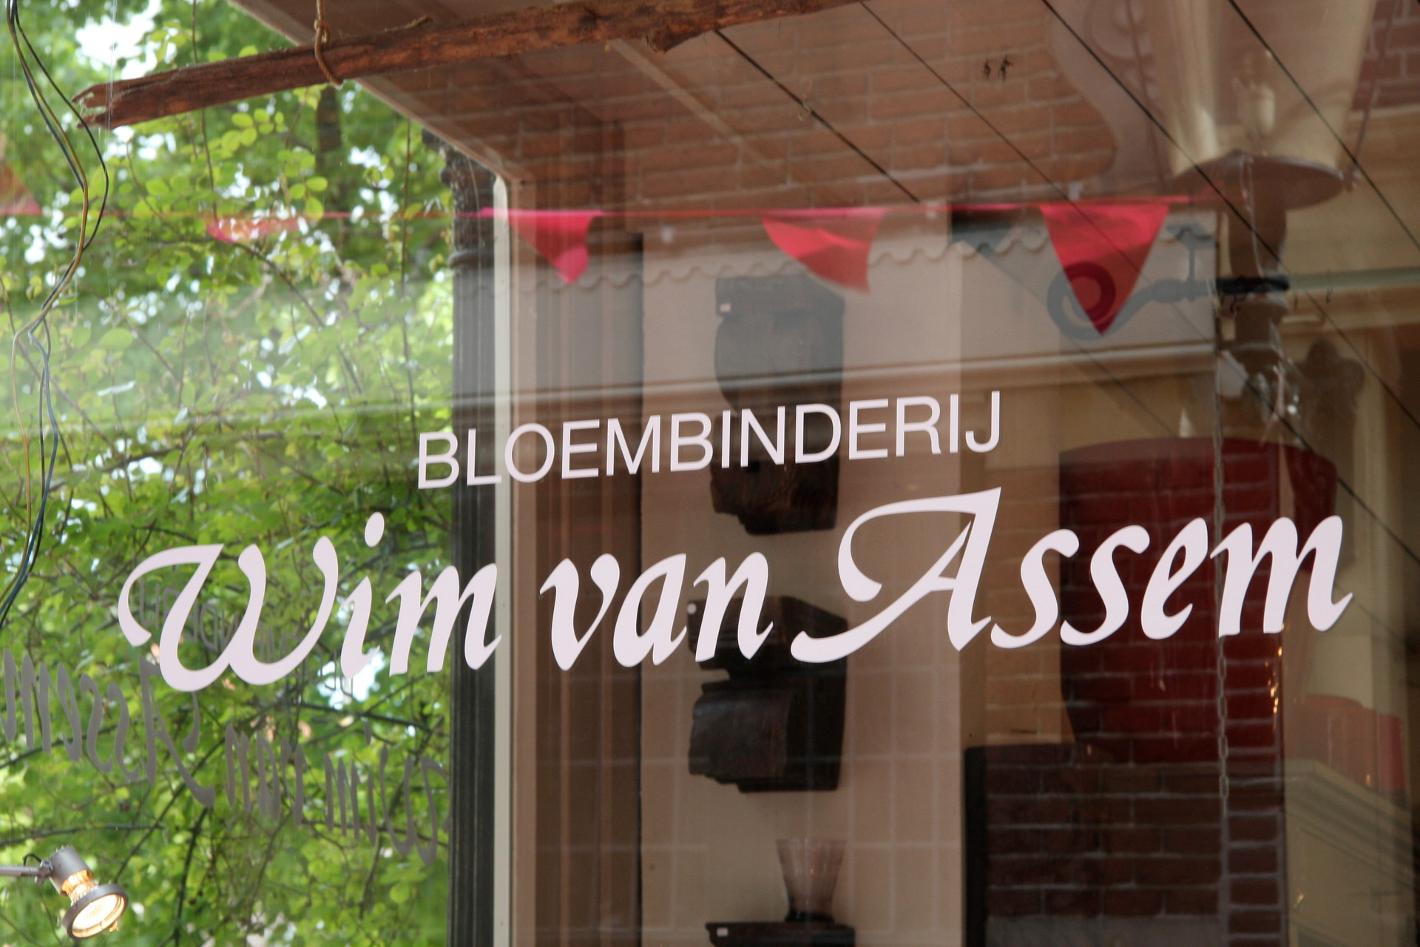 Foto Wim van Assem bloembinderij in Alkmaar, Einkaufen, Geschenke kaufen, Wohnaccessoires kaufen - #1